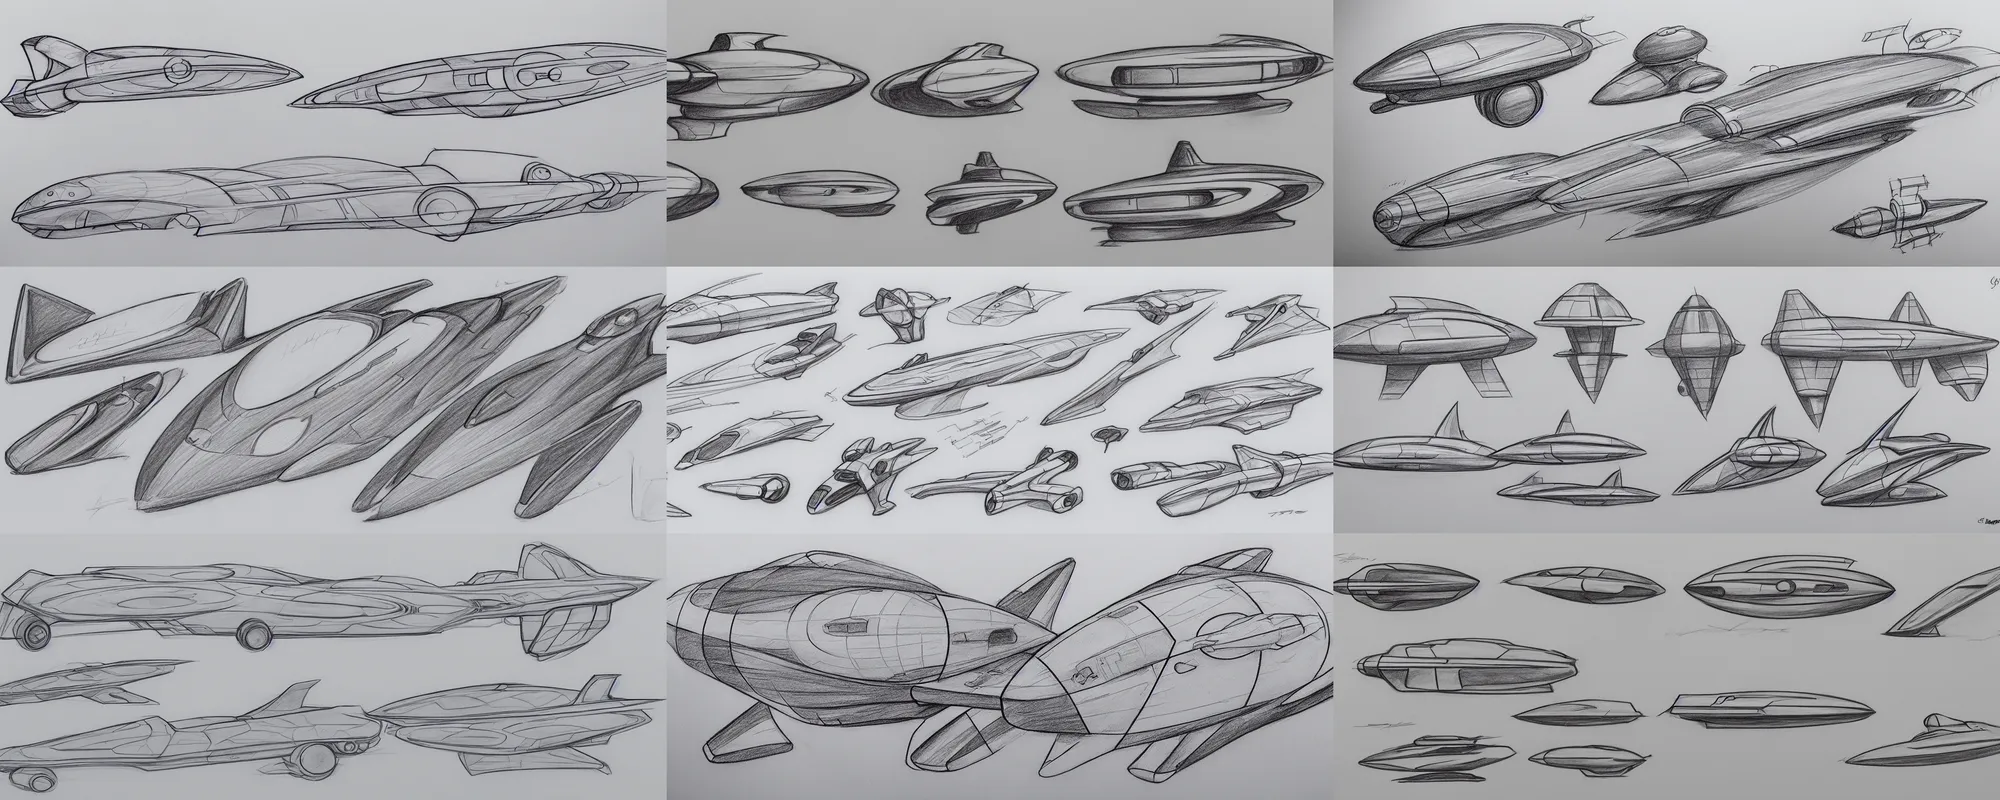 Prompt: smooth design spaceship sketches, graphite